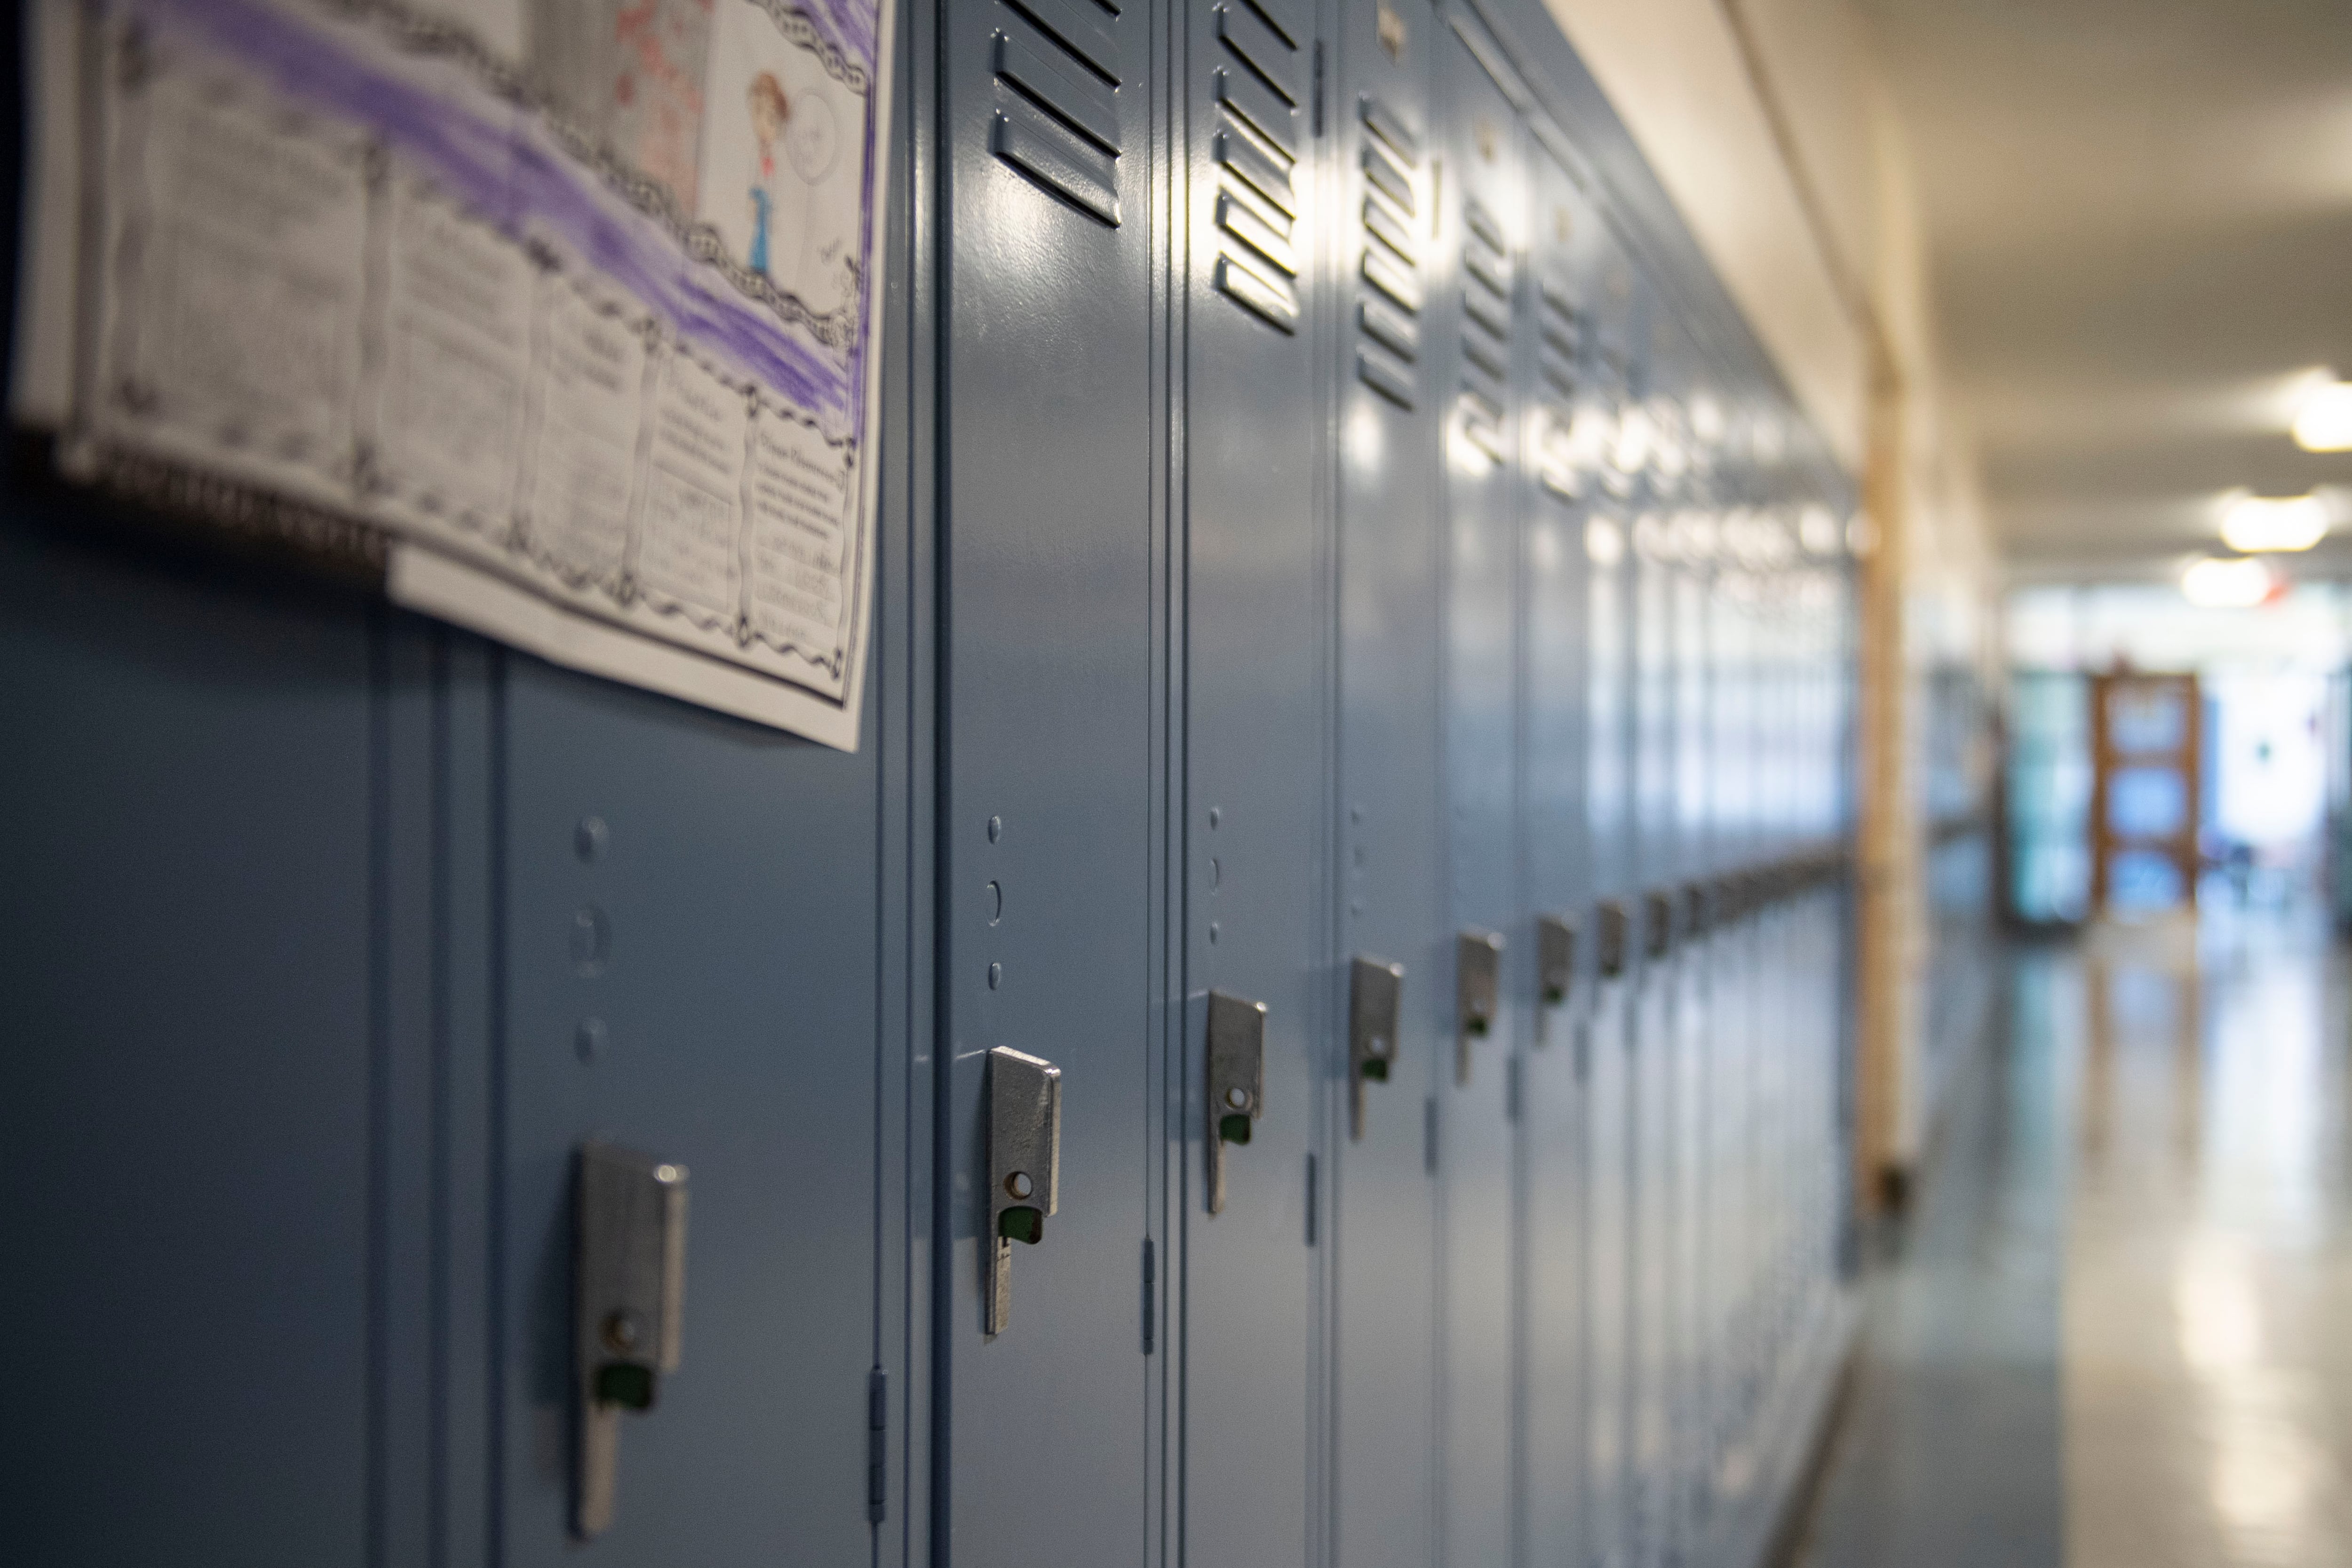 A row of blue lockers in a school hallway